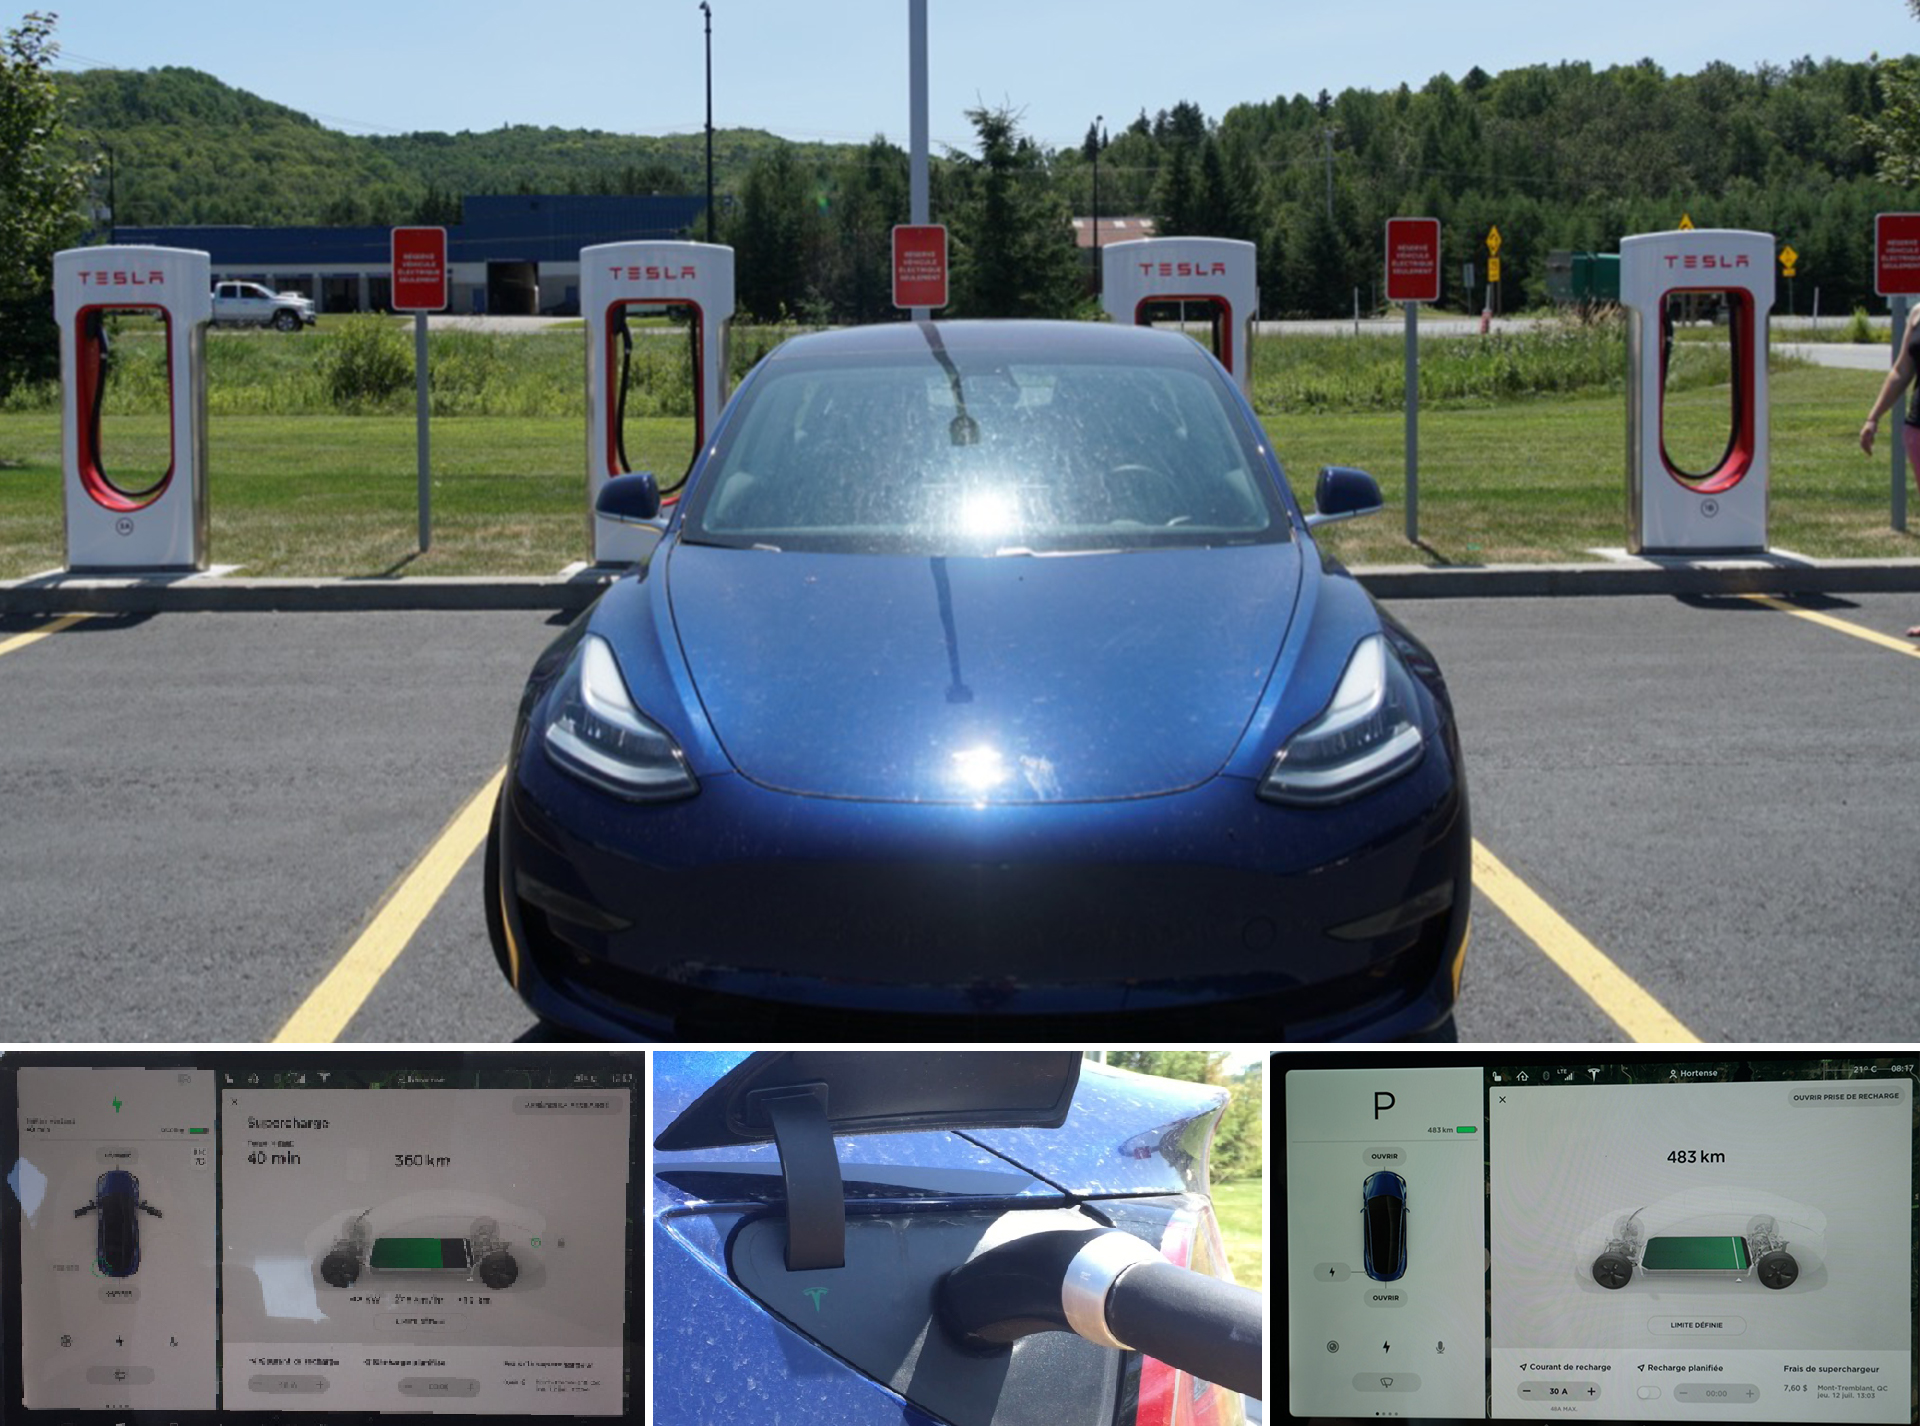 Road Trip Électrique à Bord de la Tesla Model 3 article 1 Supercharger Tesla